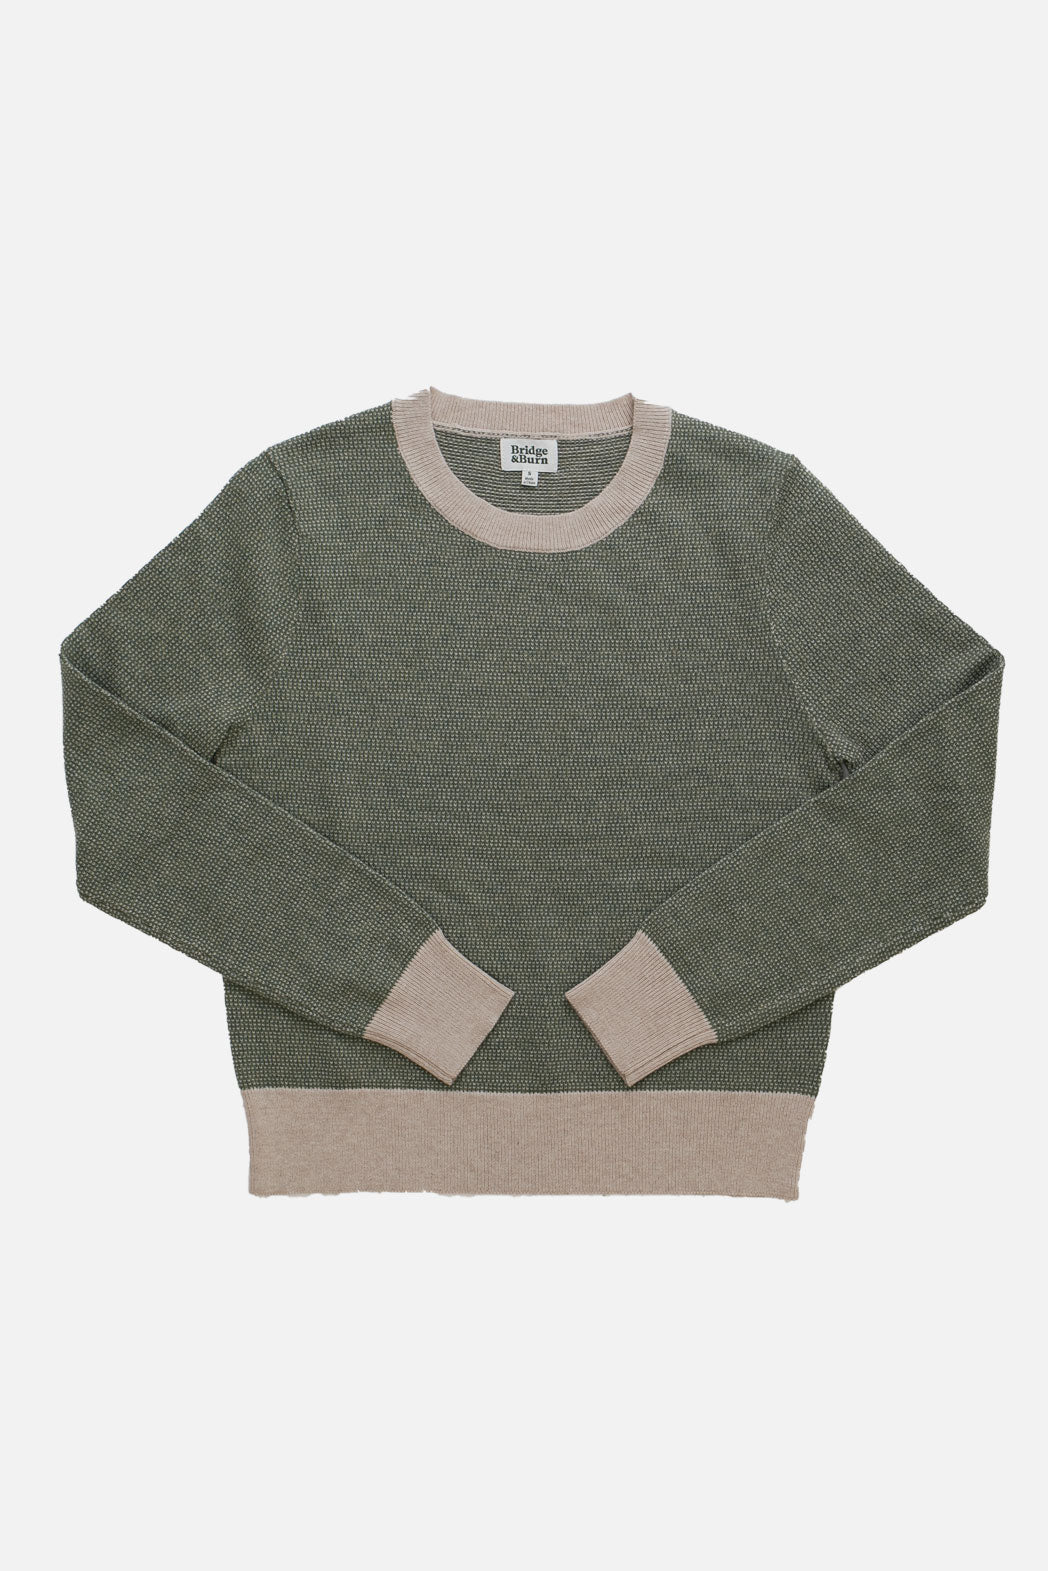 Pickering Sweater / Olive Multi